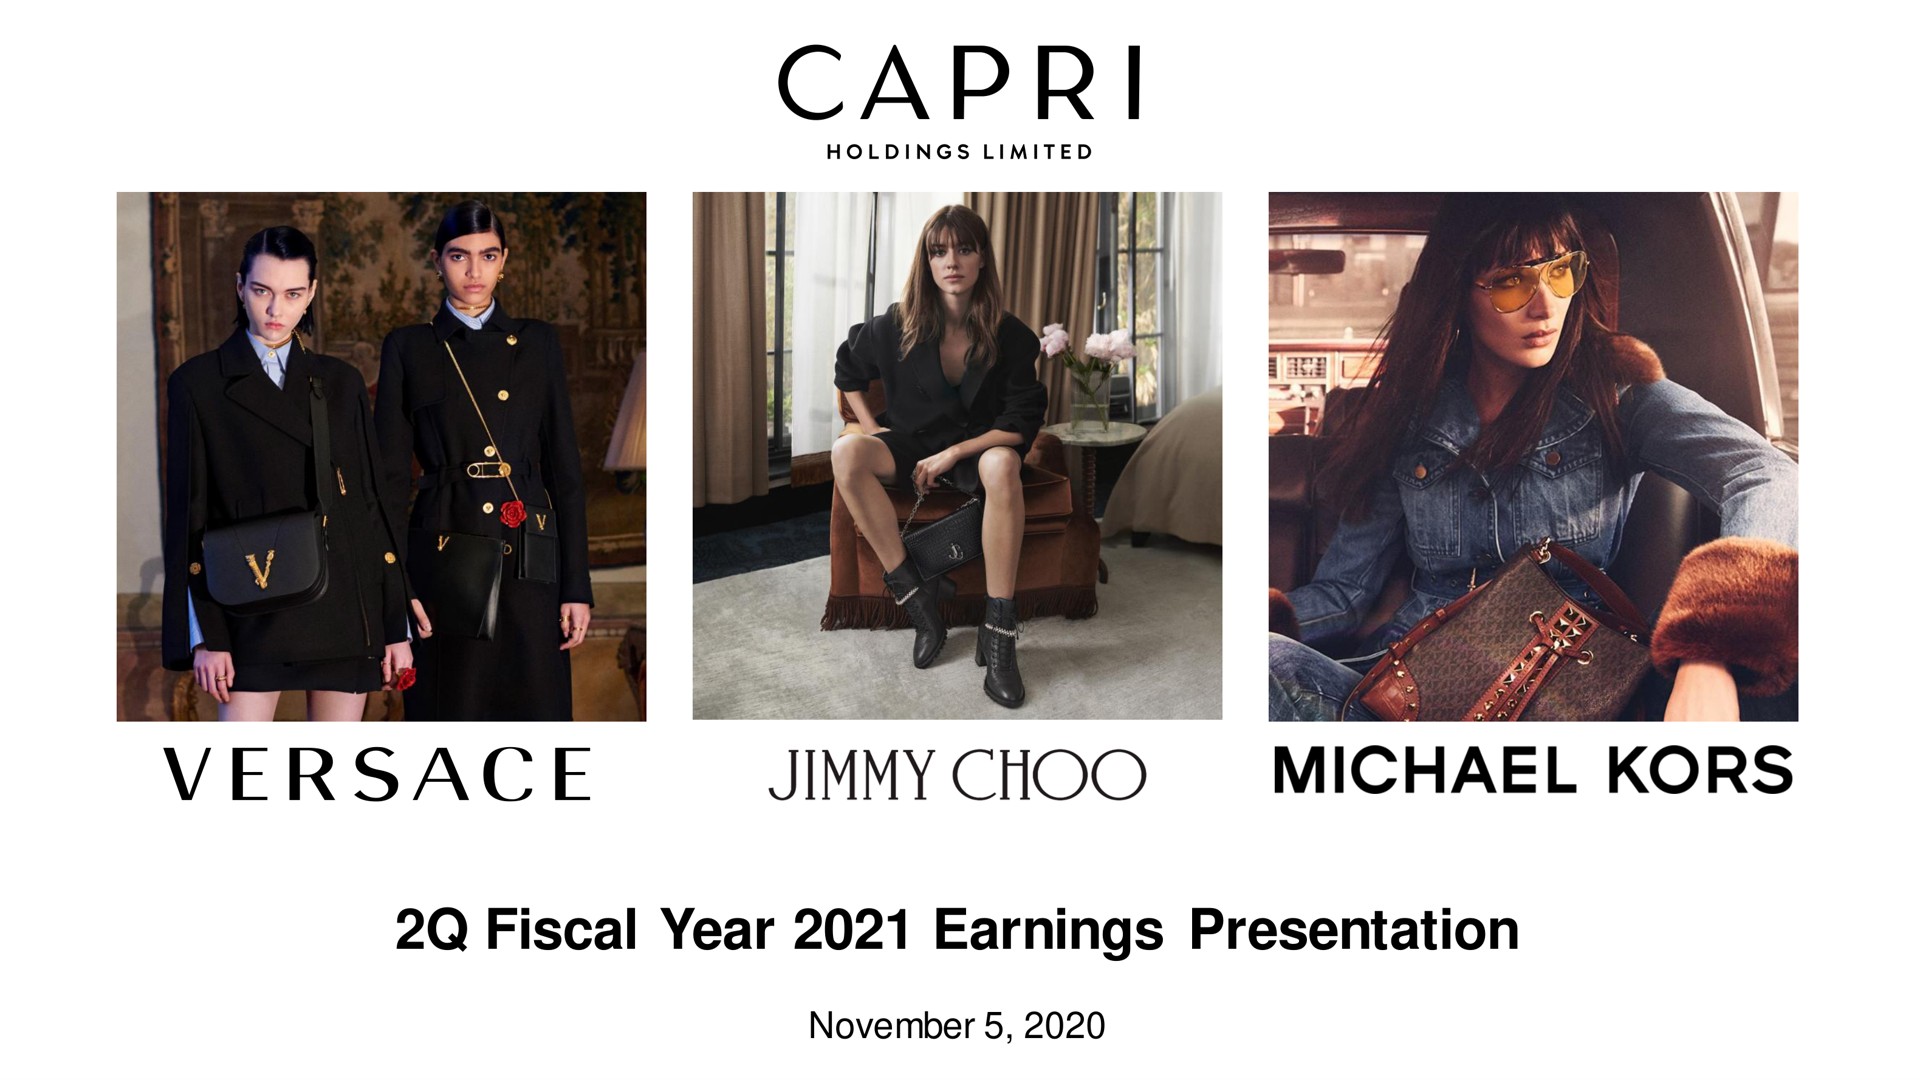 fiscal year earnings presentation kors | Capri Holdings